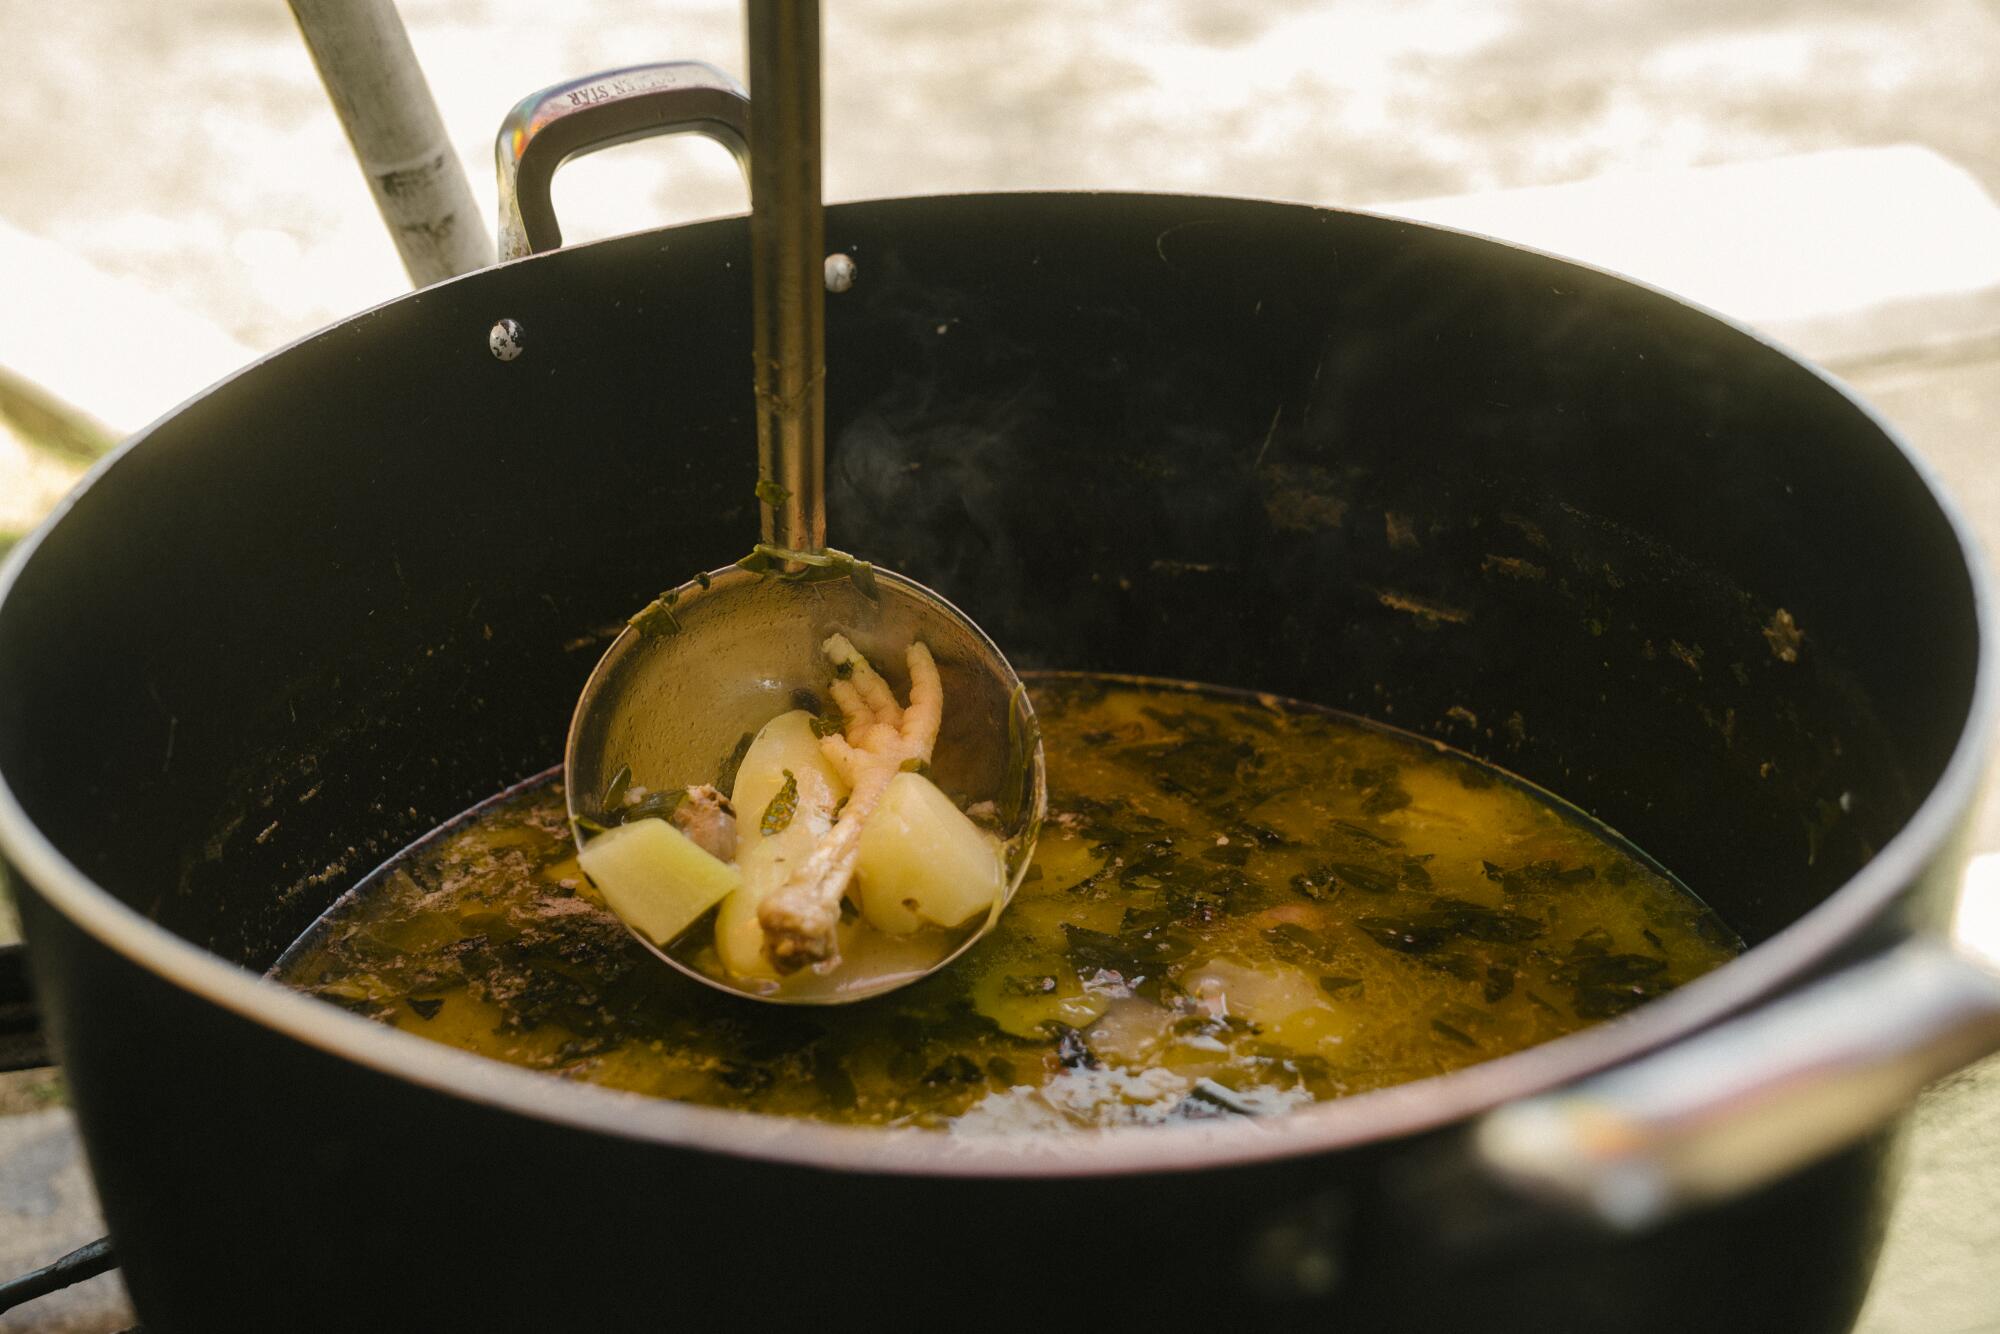 One of the many delicacies sold by vendors along the El Salvador Community Corridor is sopa de gallina india.